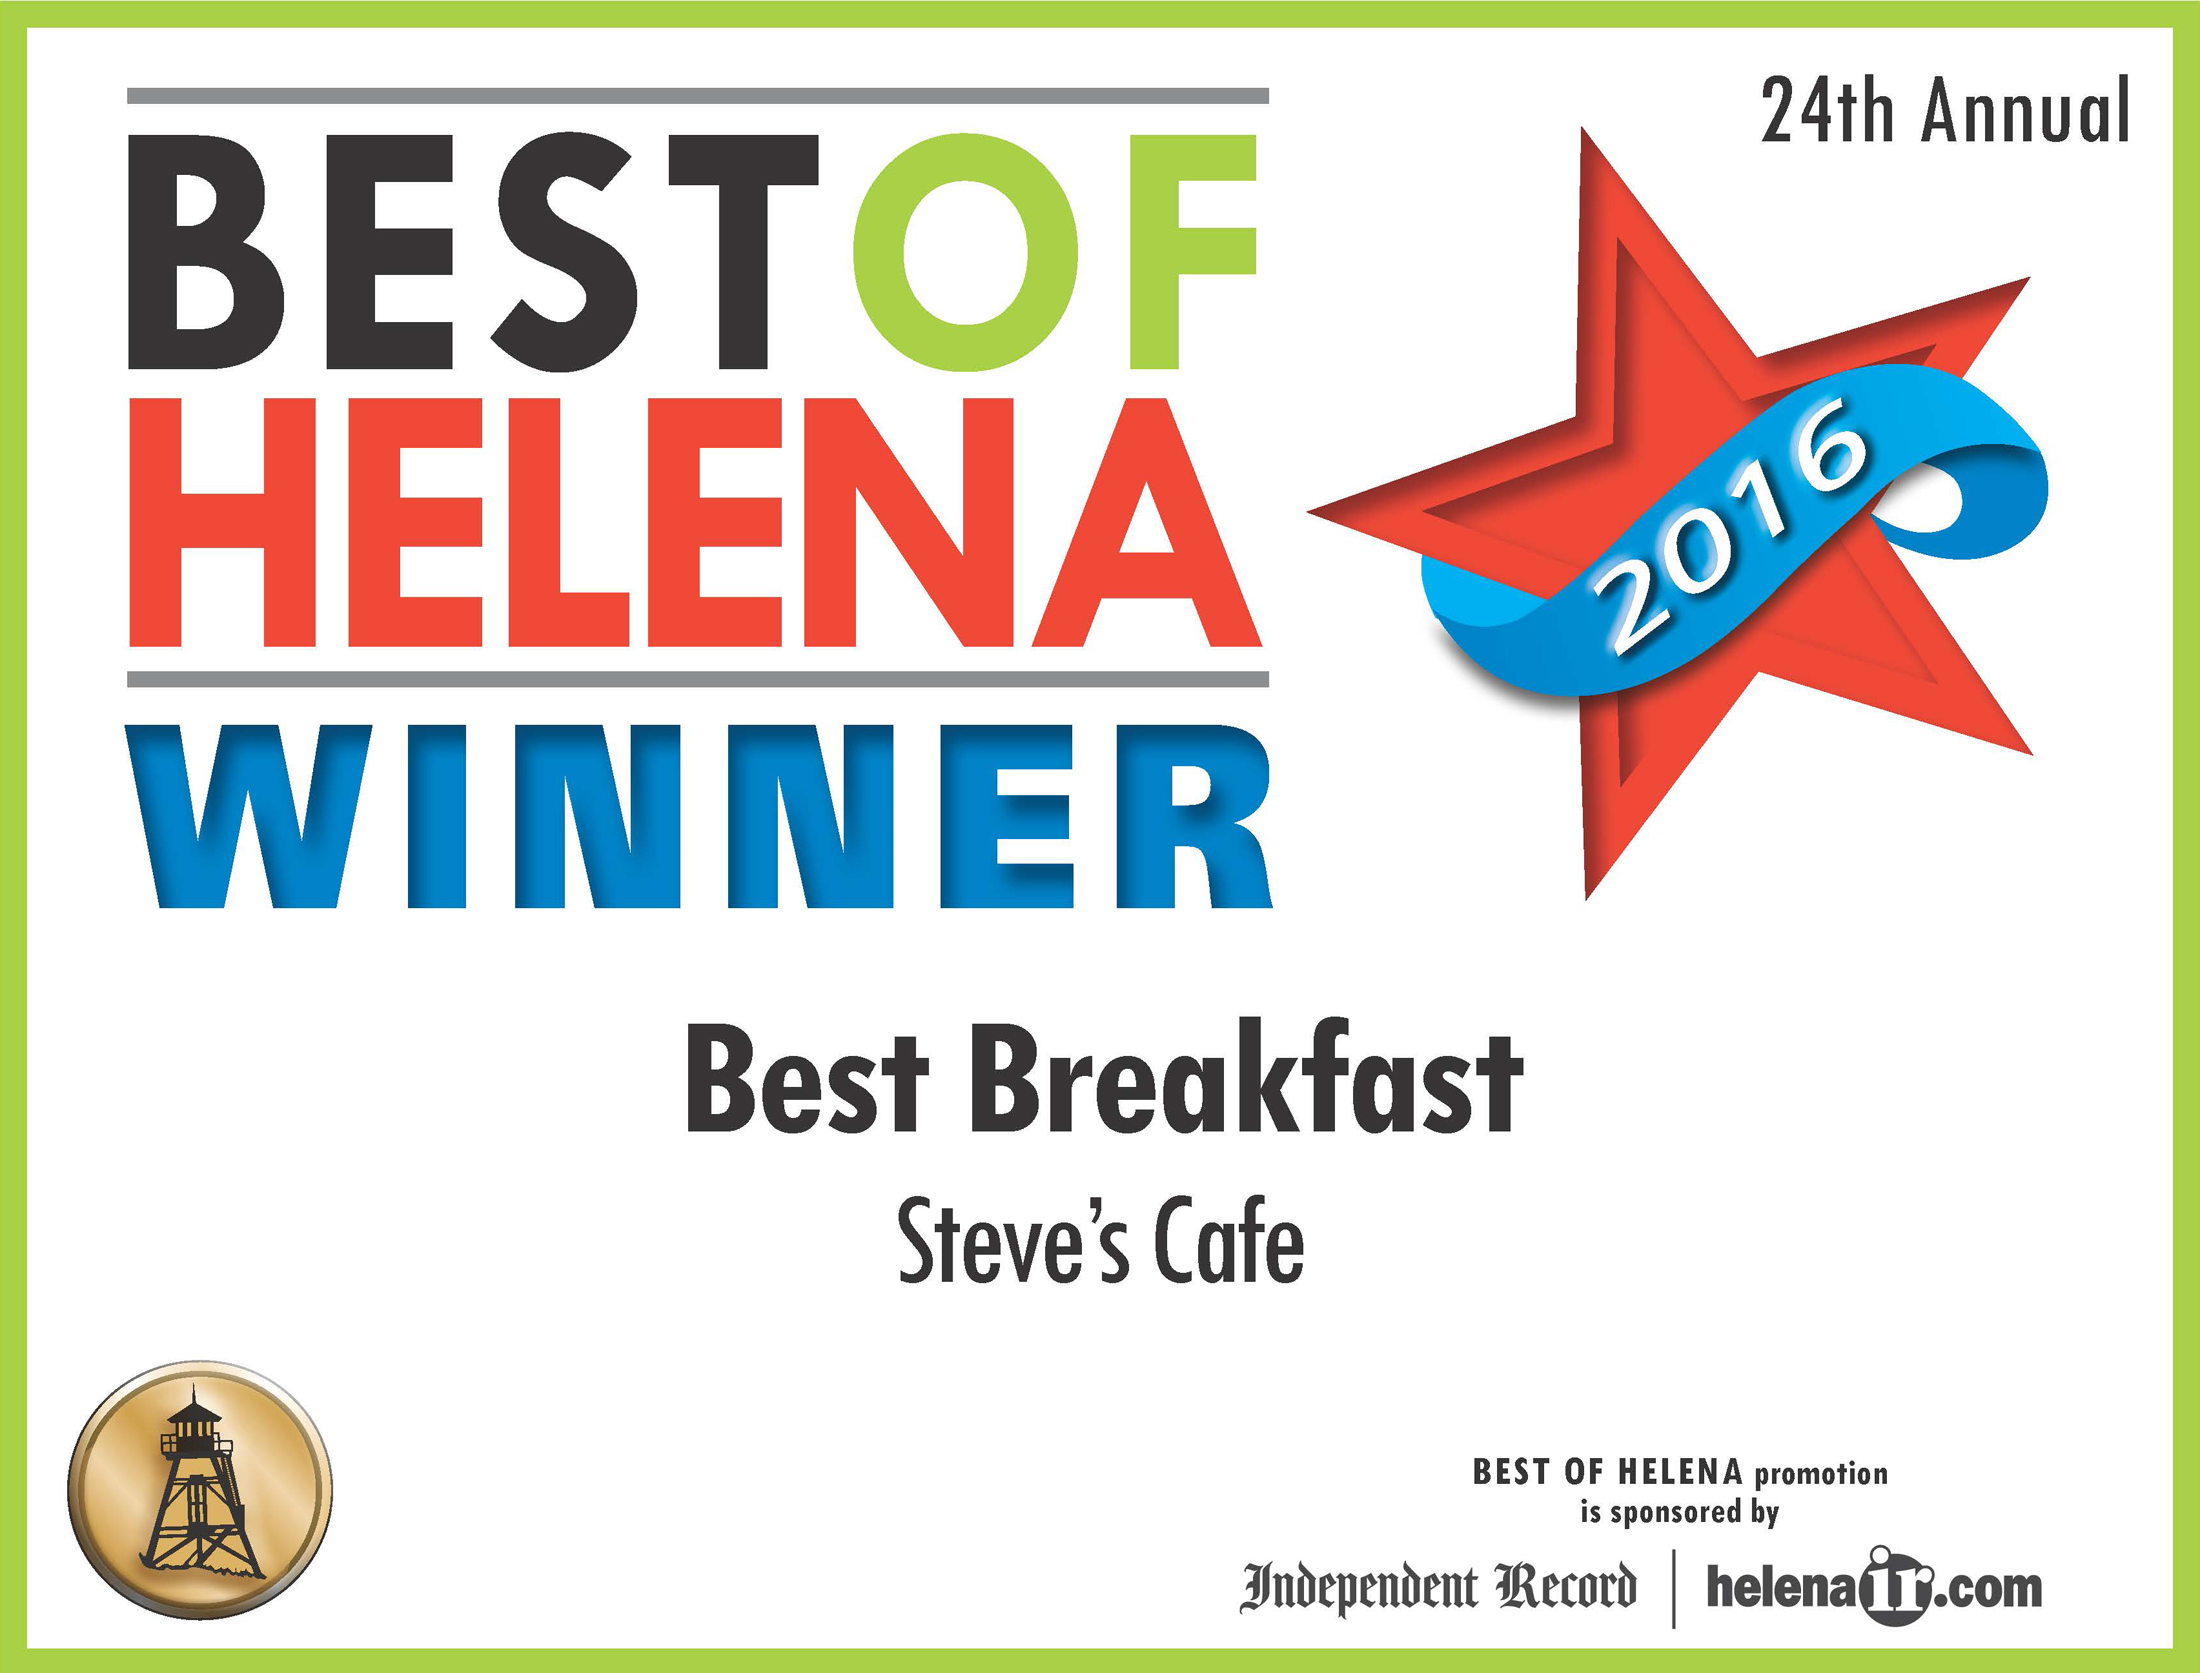 Steves Cafe Best Breakfast